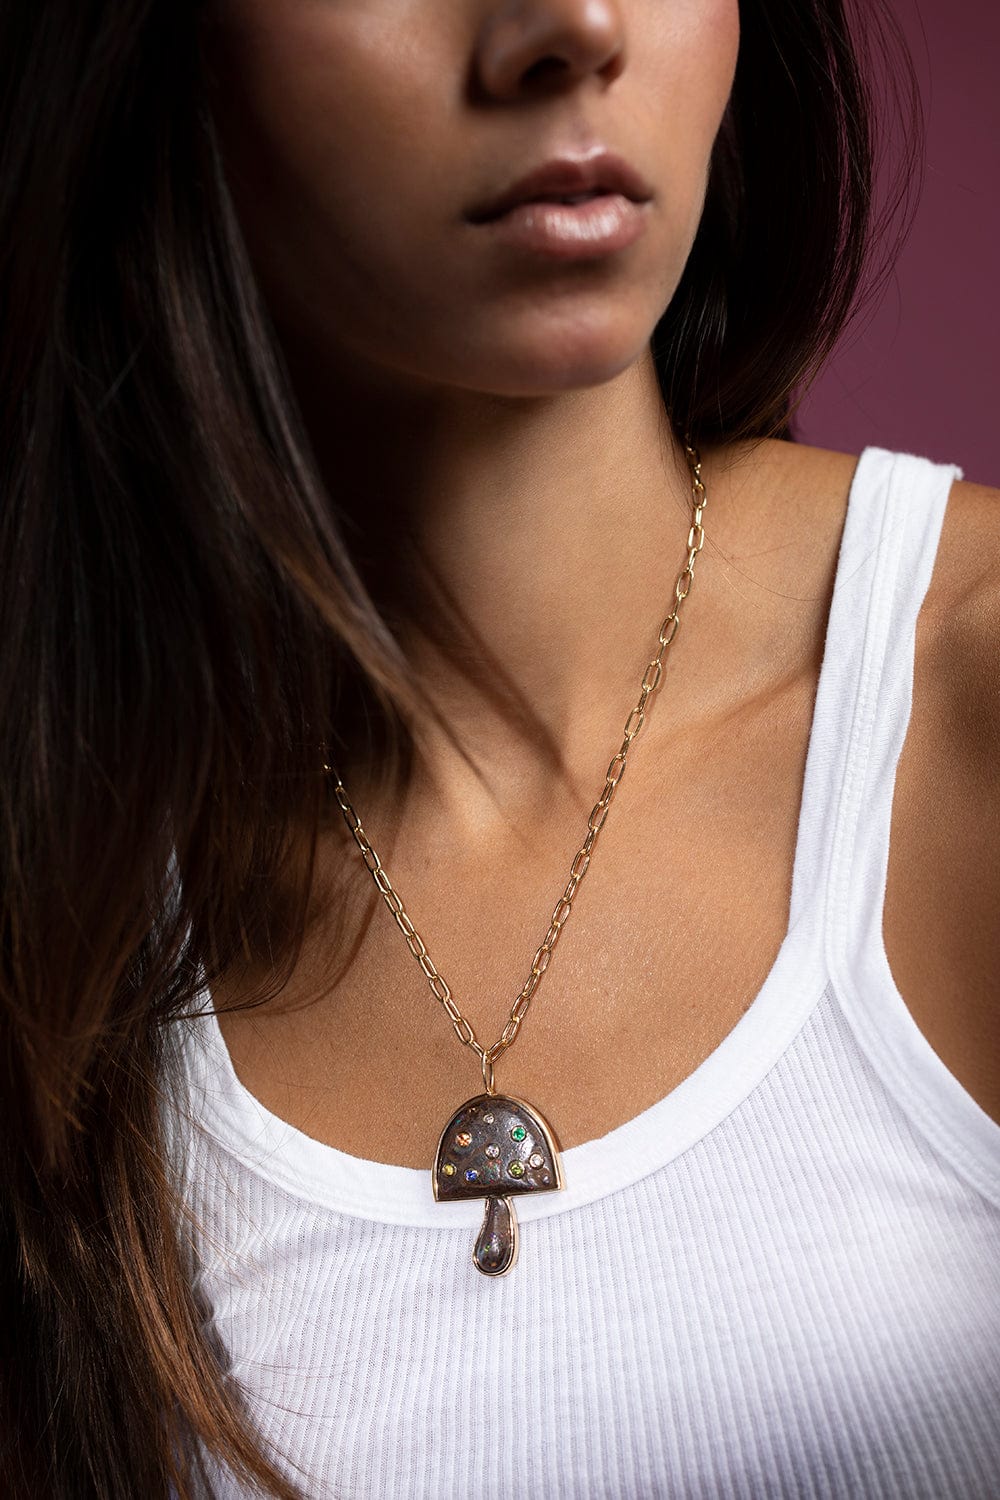 BRENT NEALE-Boulder Opal Magic Mushroom Pendant Necklace-YELLOW GOLD